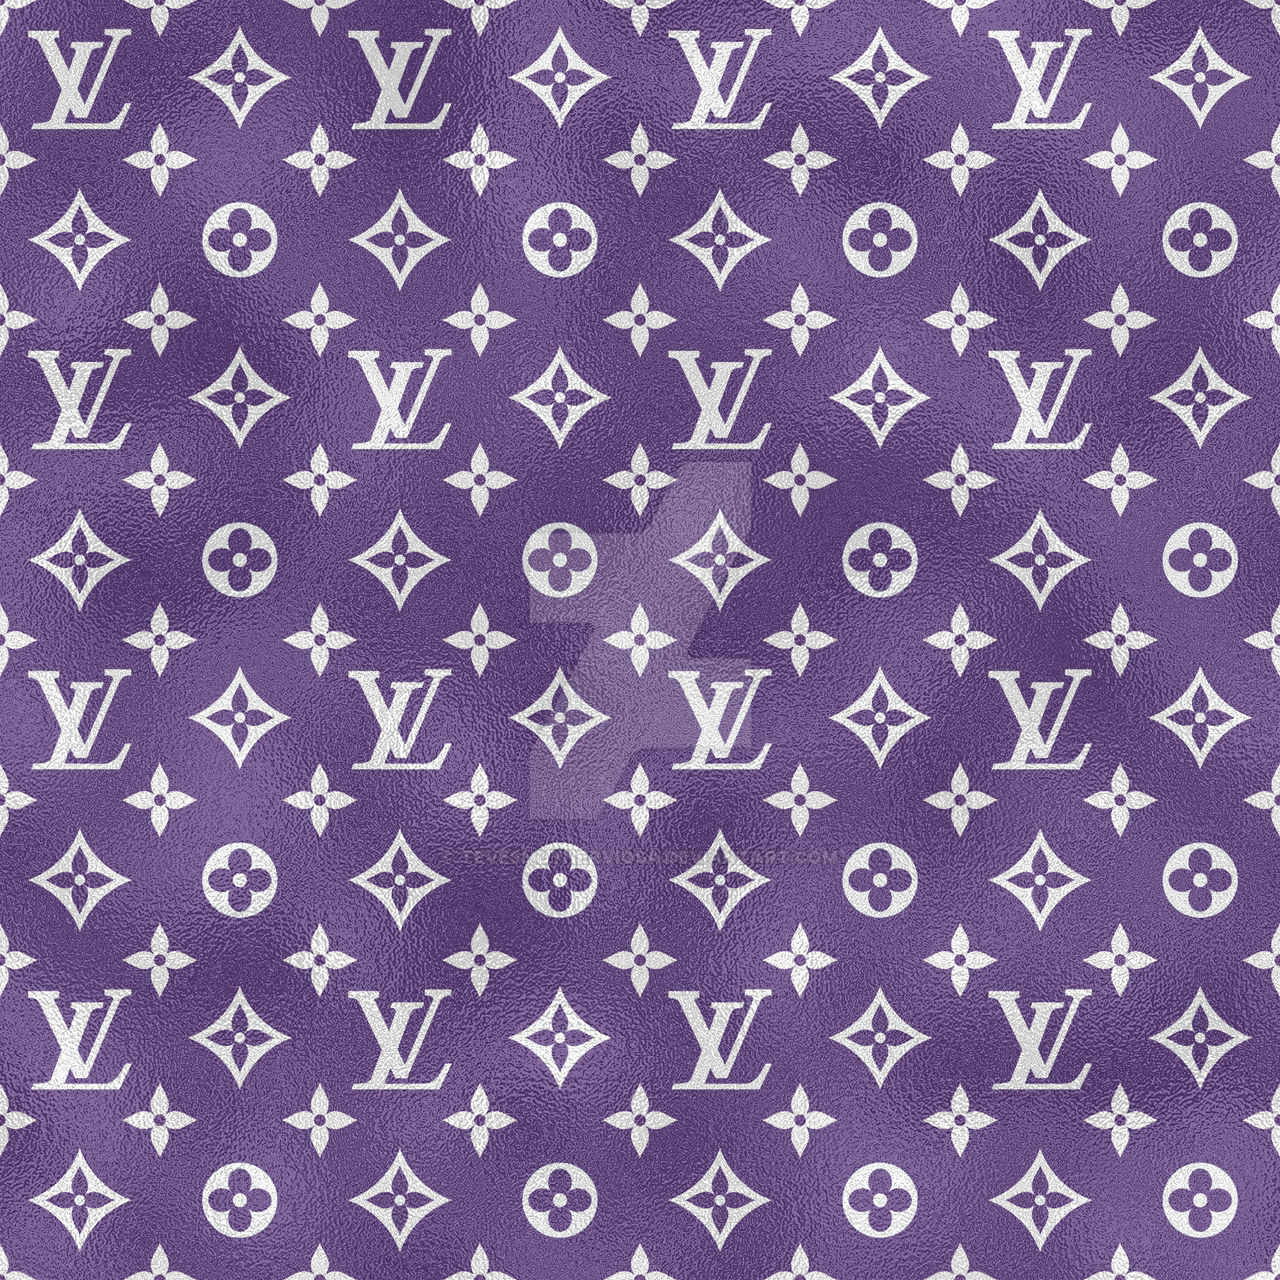 Louis Vuitton Logo PNG Transparent Background by TeVesMuyNerviosa